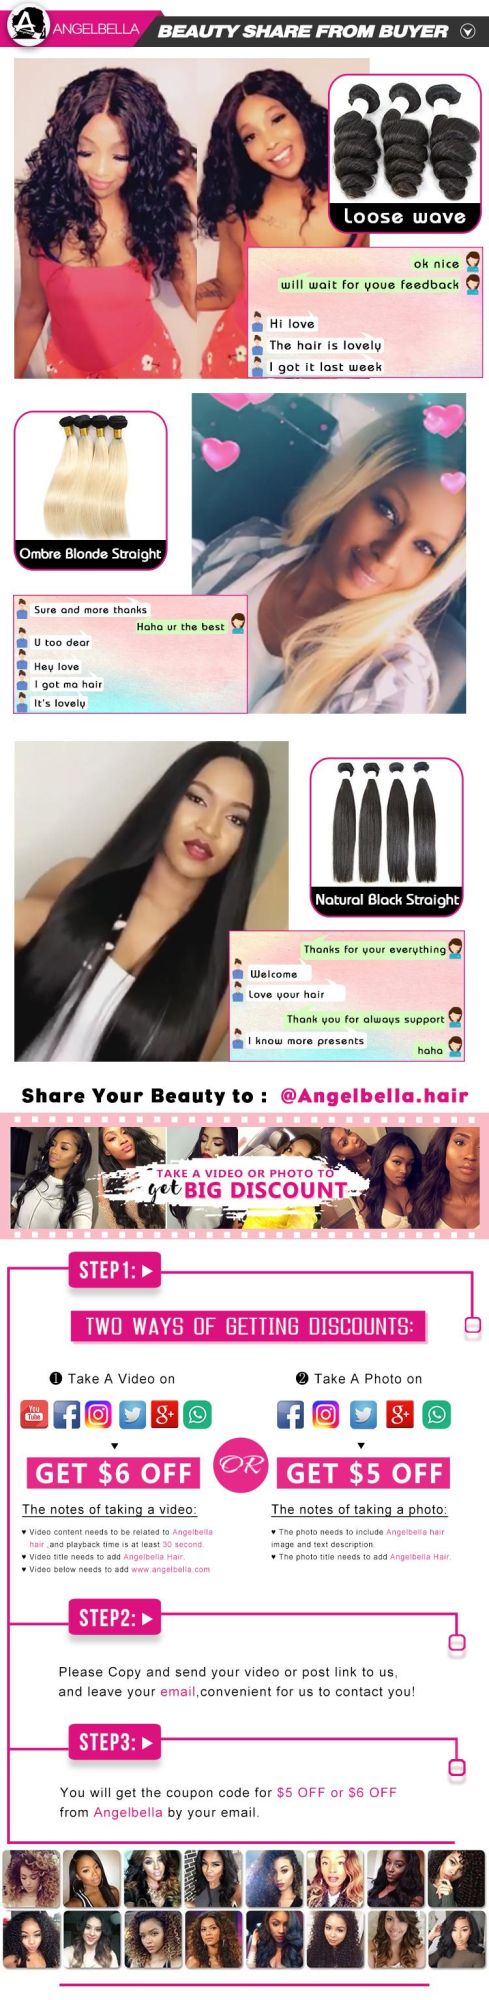 Angelbella Natural Brazilian Front Lace Wig Deep Wave Virgin Remy Hair Wigs